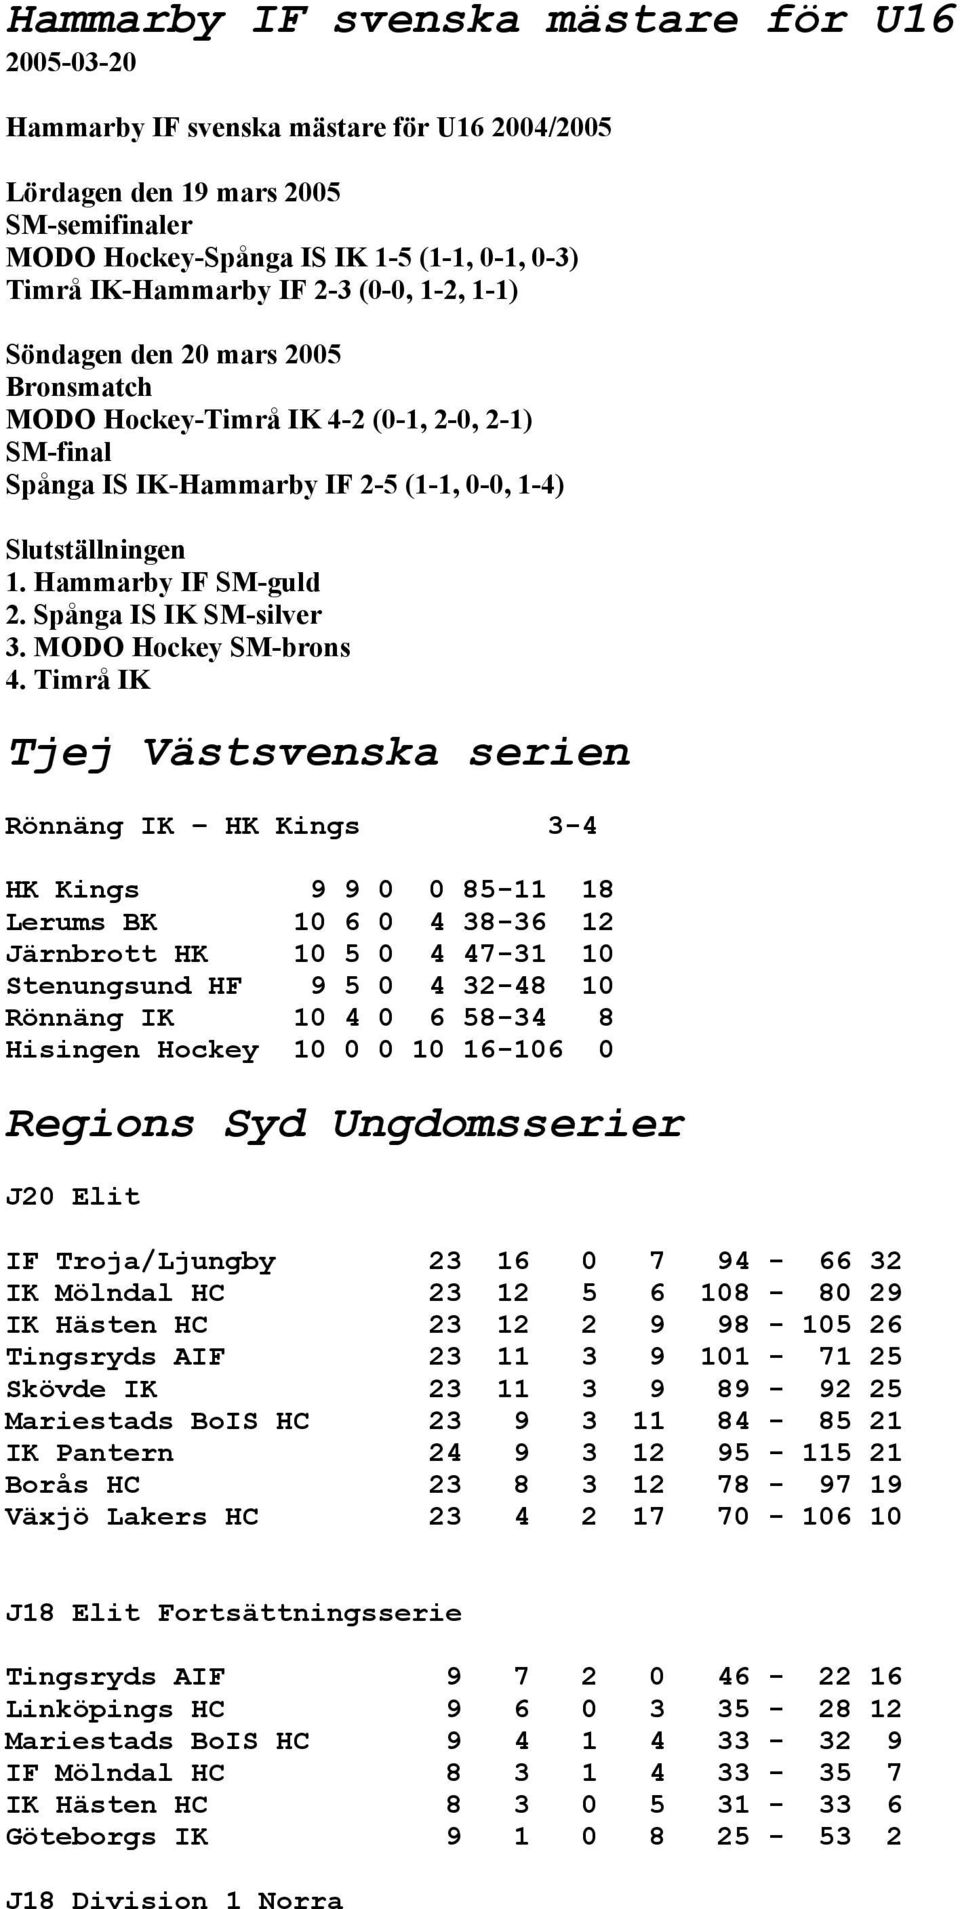 Spånga IS IK SM-silver 3. MODO Hockey SM-brons 4.